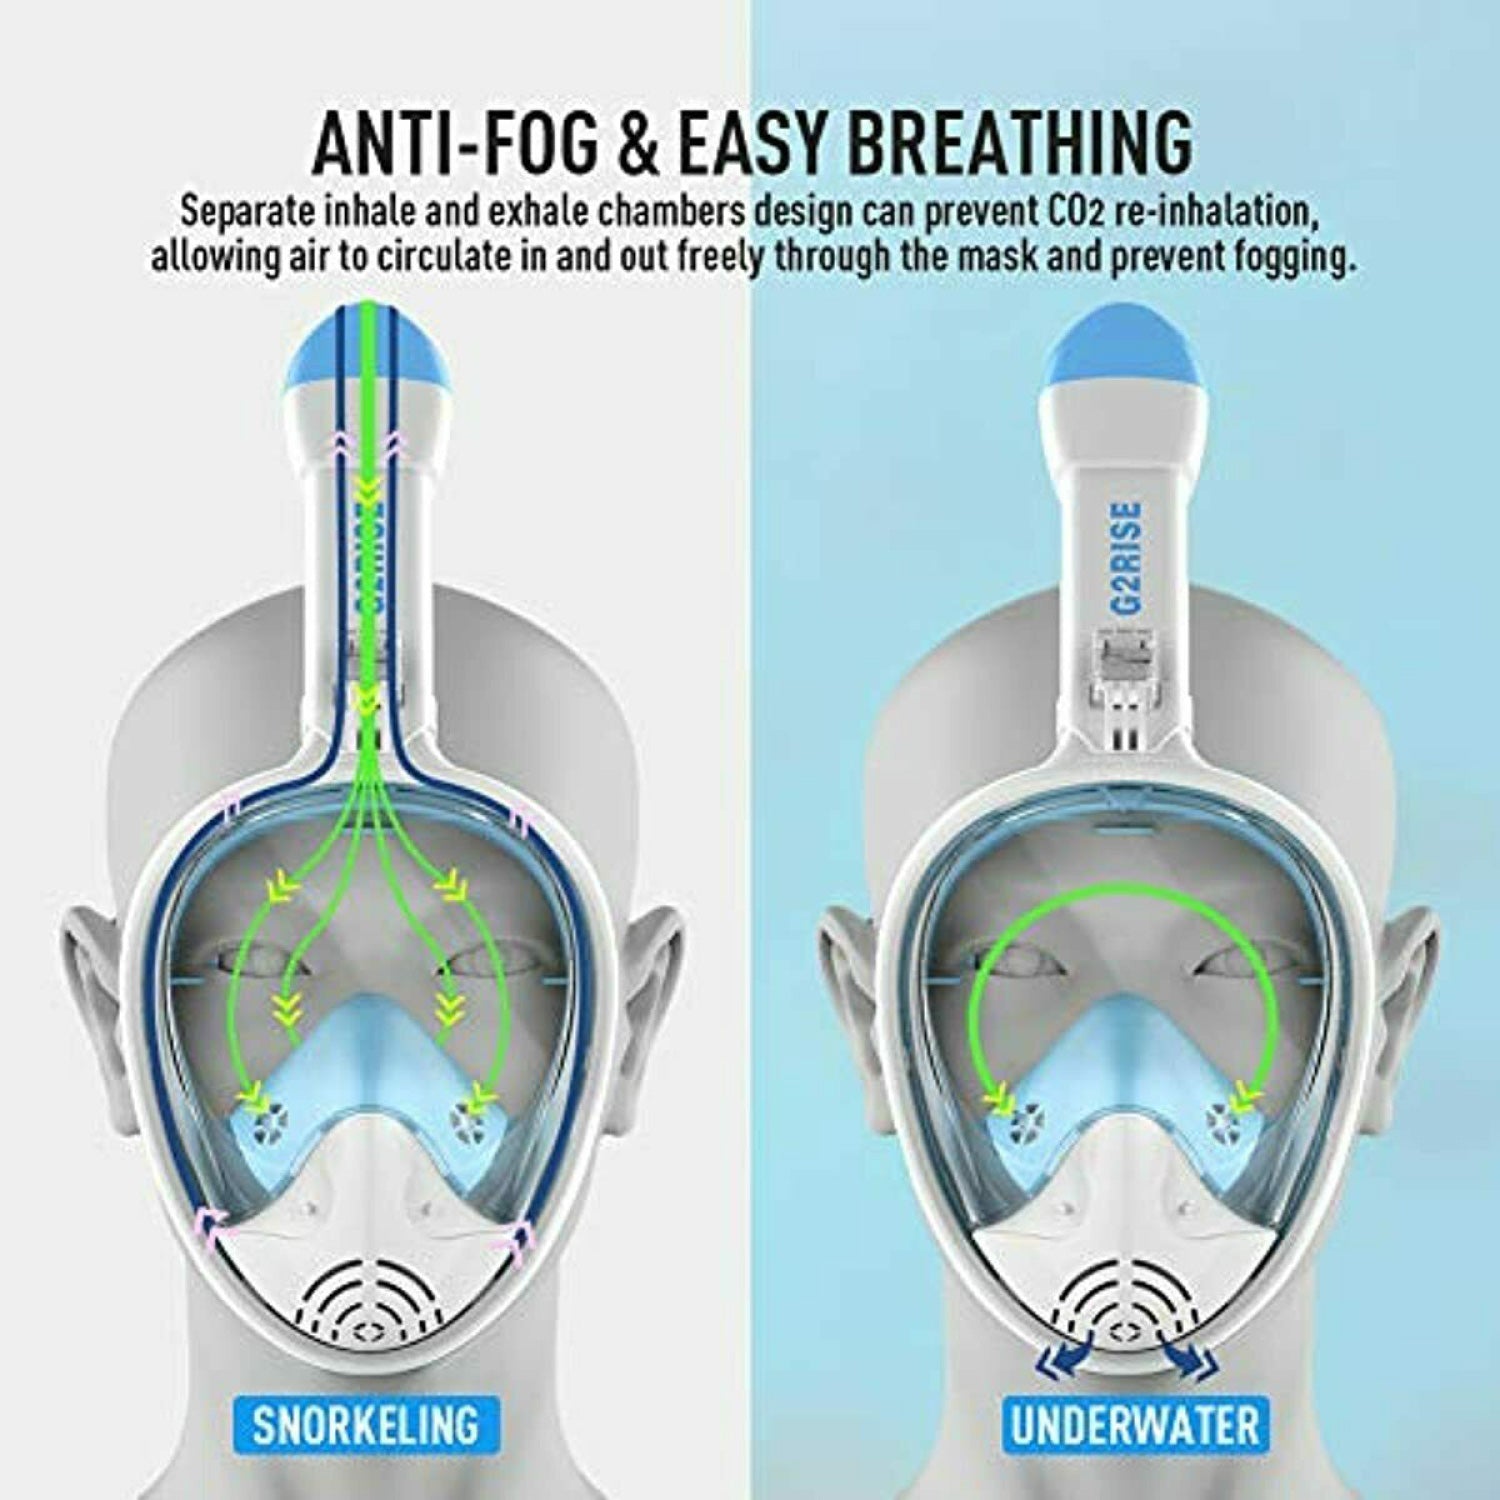 Safety Breathing System